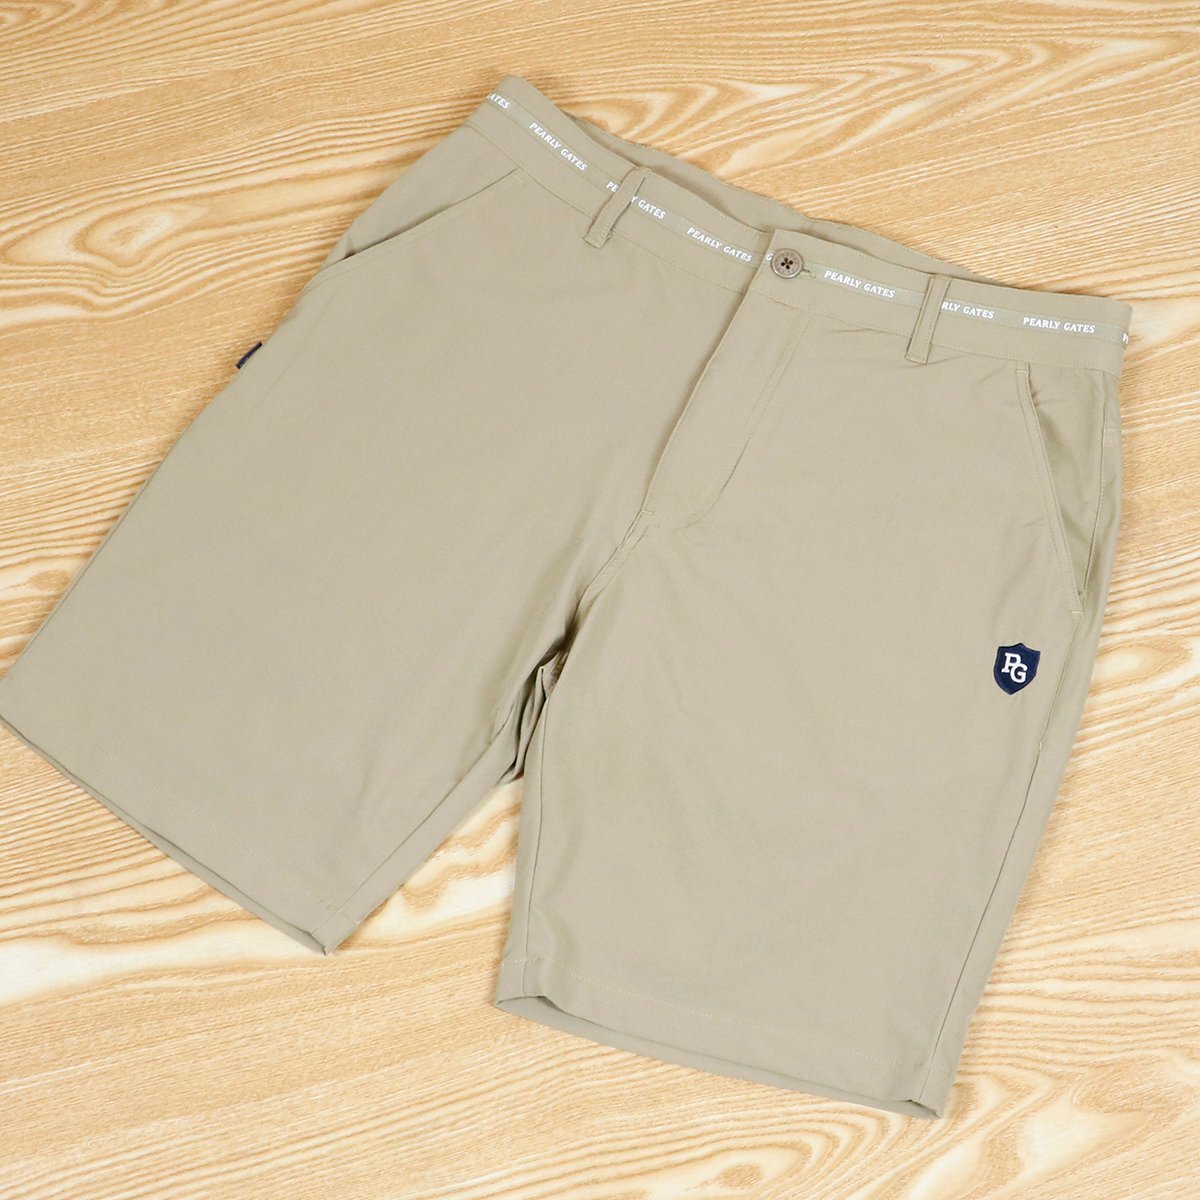  новый товар Pearly Gates PEARLYGATES брюки мужской лето Golf шорты *325 хаки 4